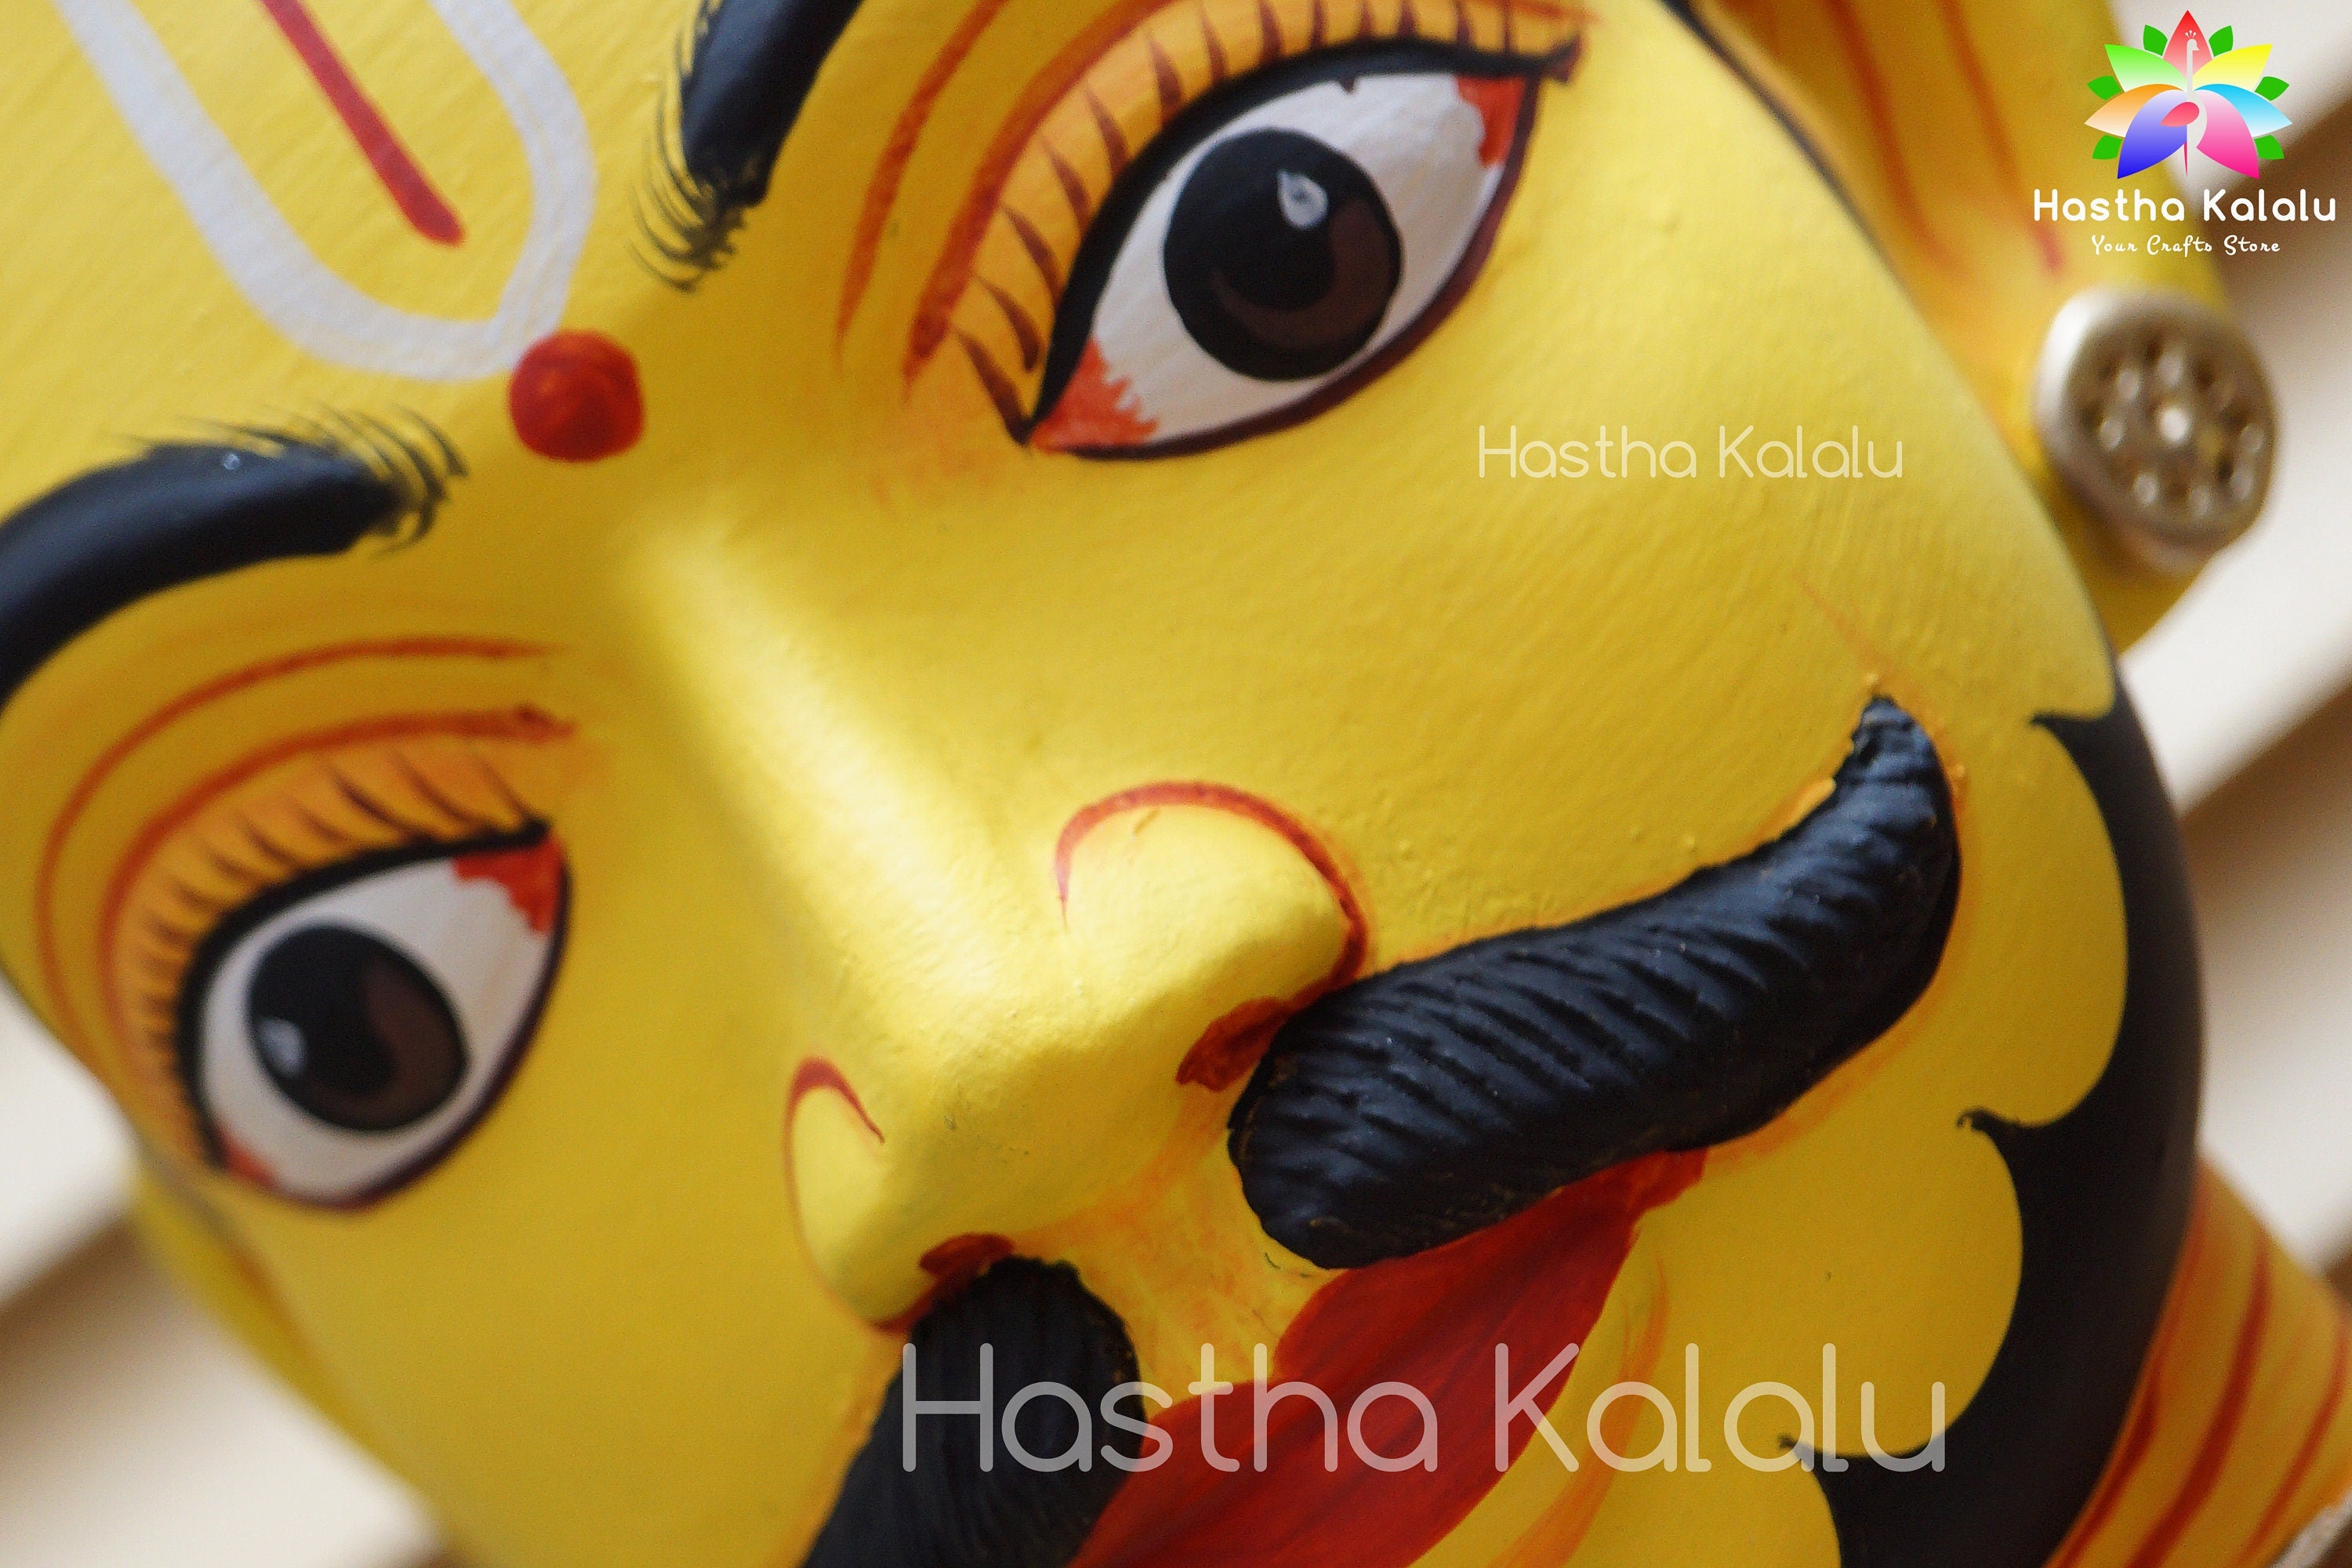 Handmade Wooden Iconic Head idols of Rati-Manmadha